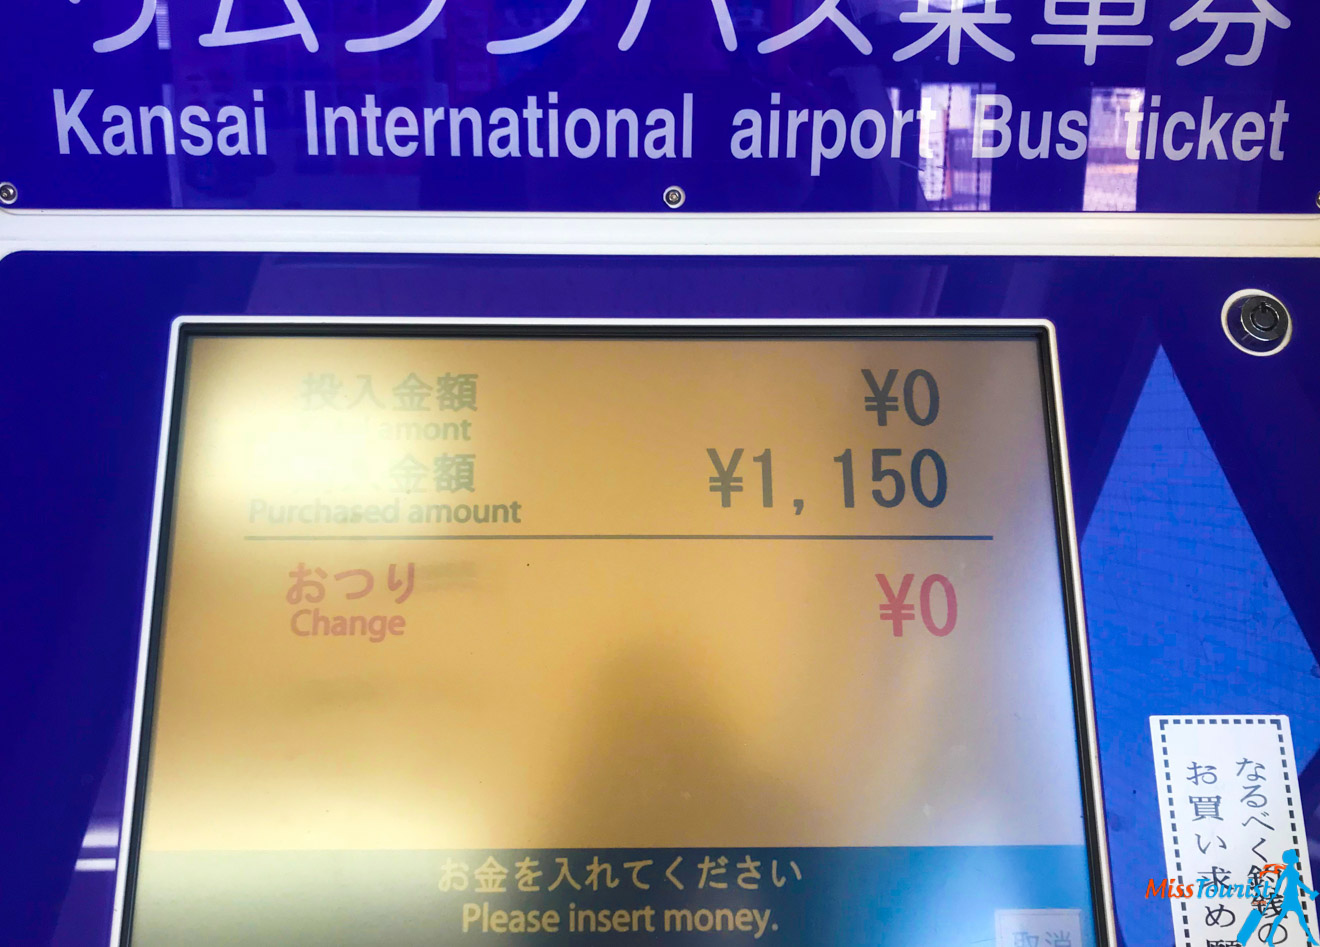 Why You Should Definitely Add Wakayama To Your Japan Itinerary Bus ticket from Wakayama to KIX Airport